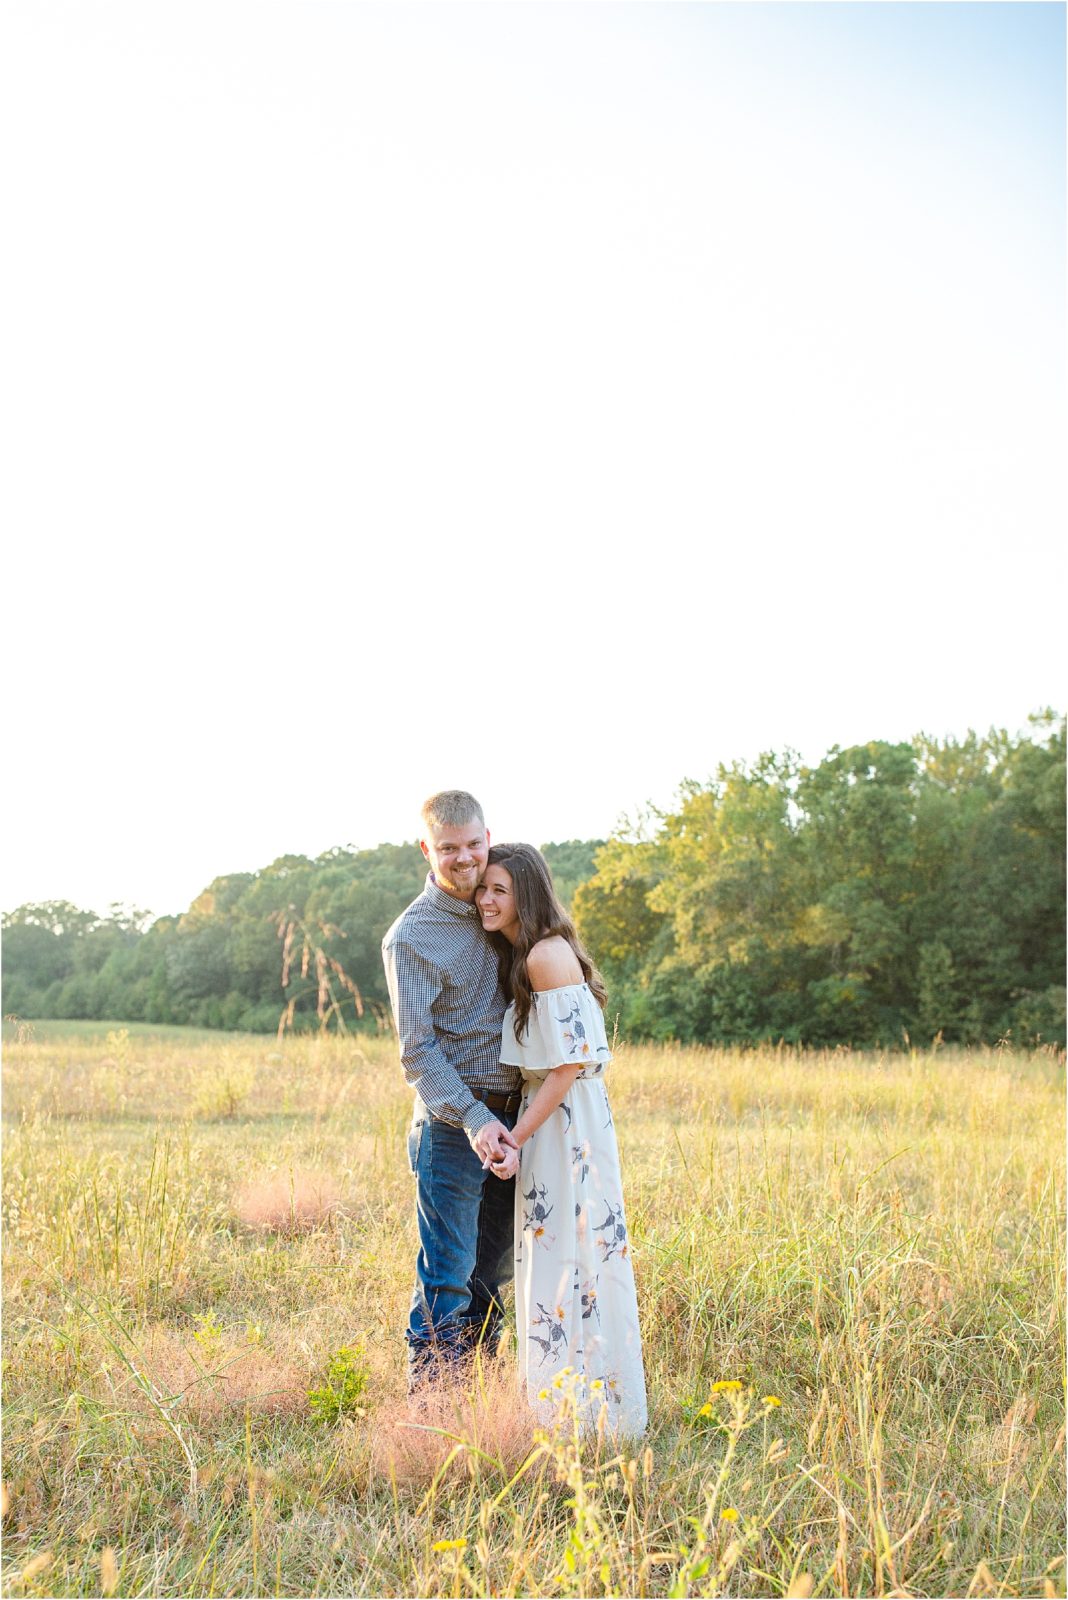 Guy and girl hugging in hay field